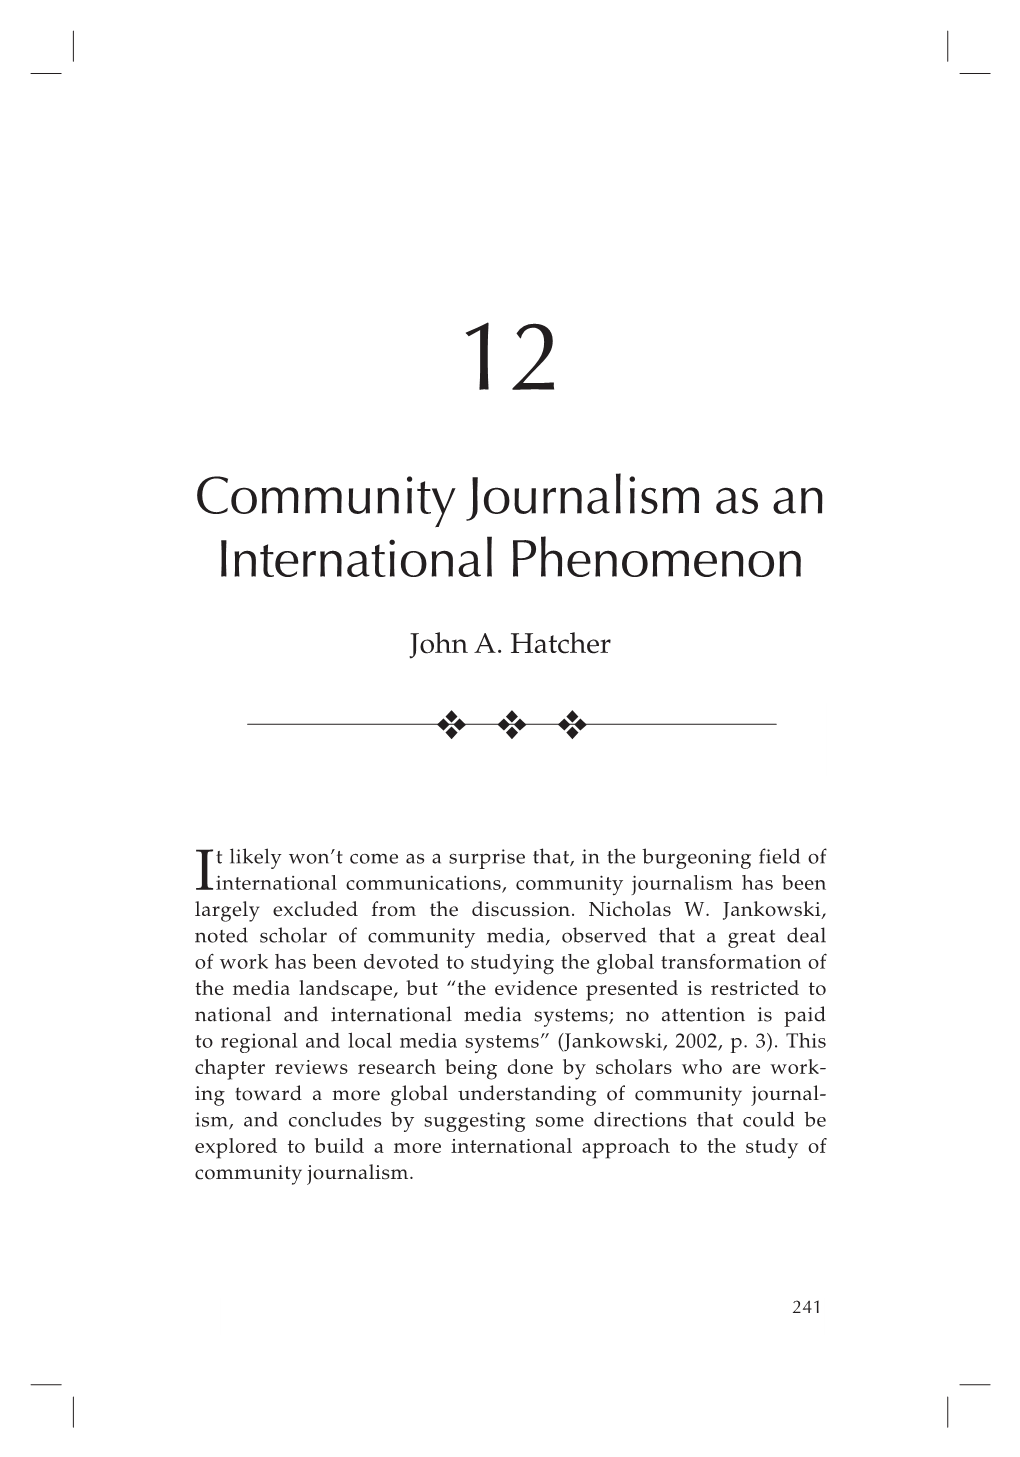 Community Journalism As an International Phenomenon